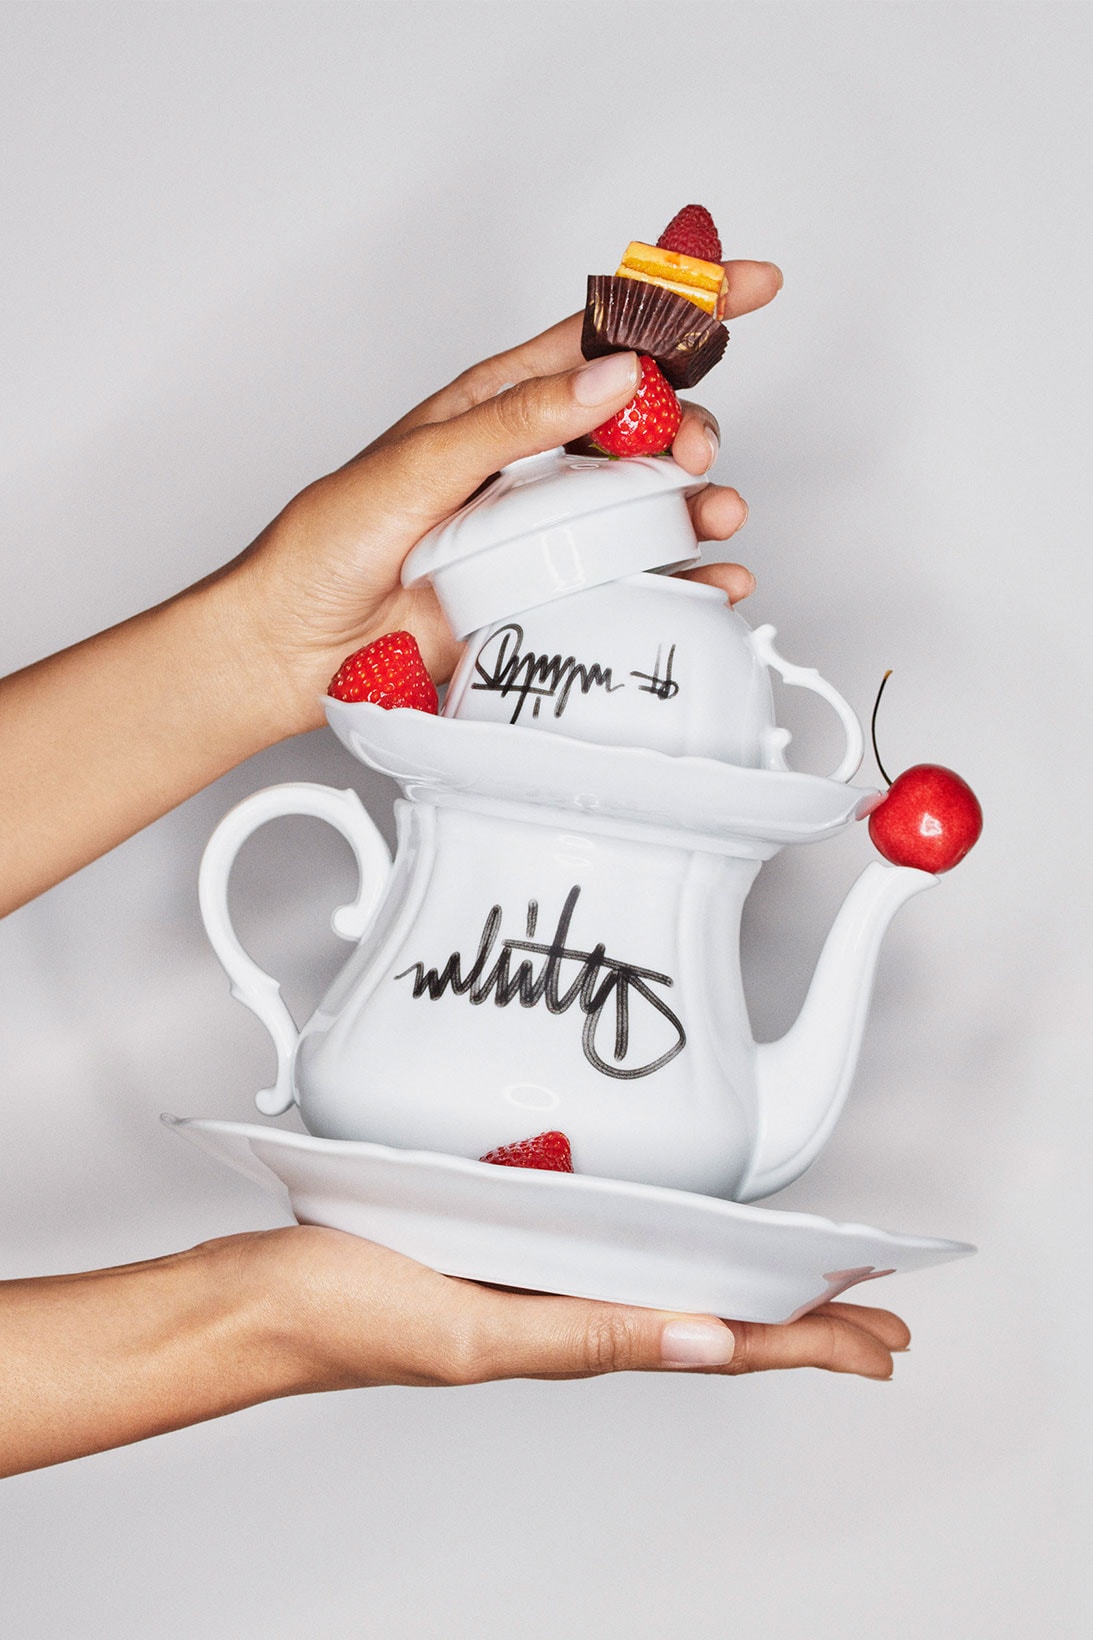 Off-White™x Ginori 1735 collection teacups saucer teapot